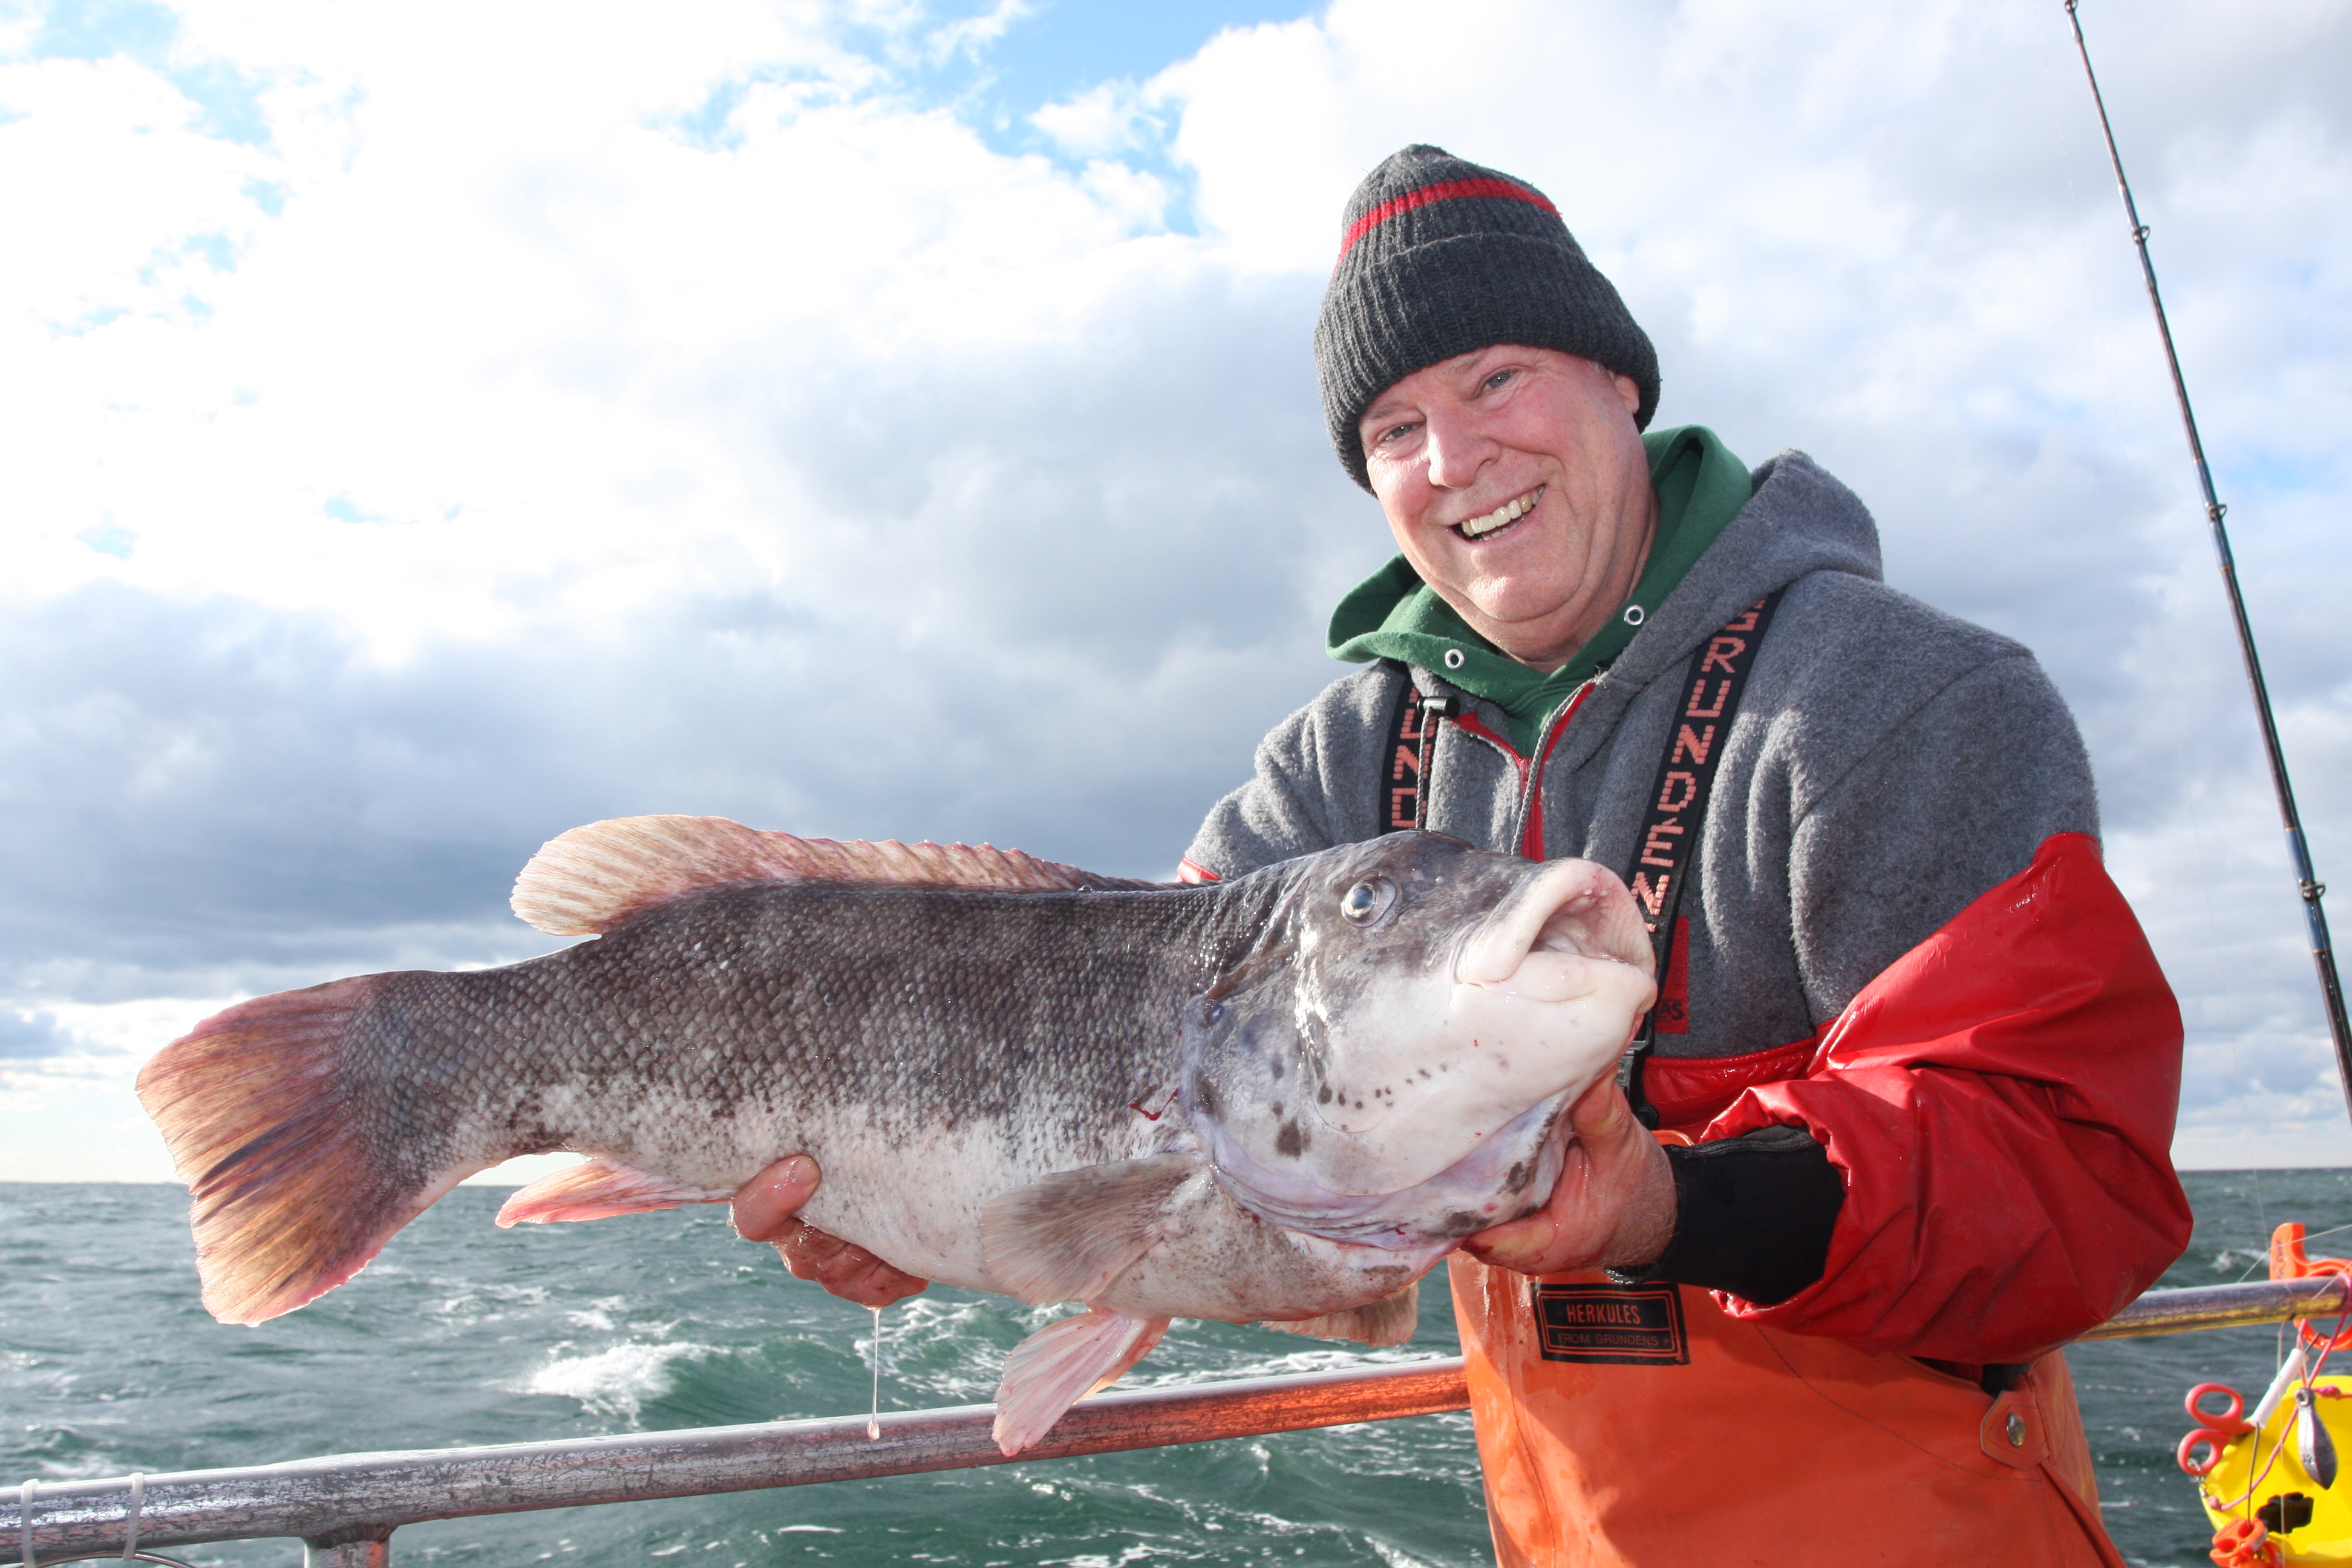 Fishing Knot award‼️ 15 pound test mono fishing line against 30